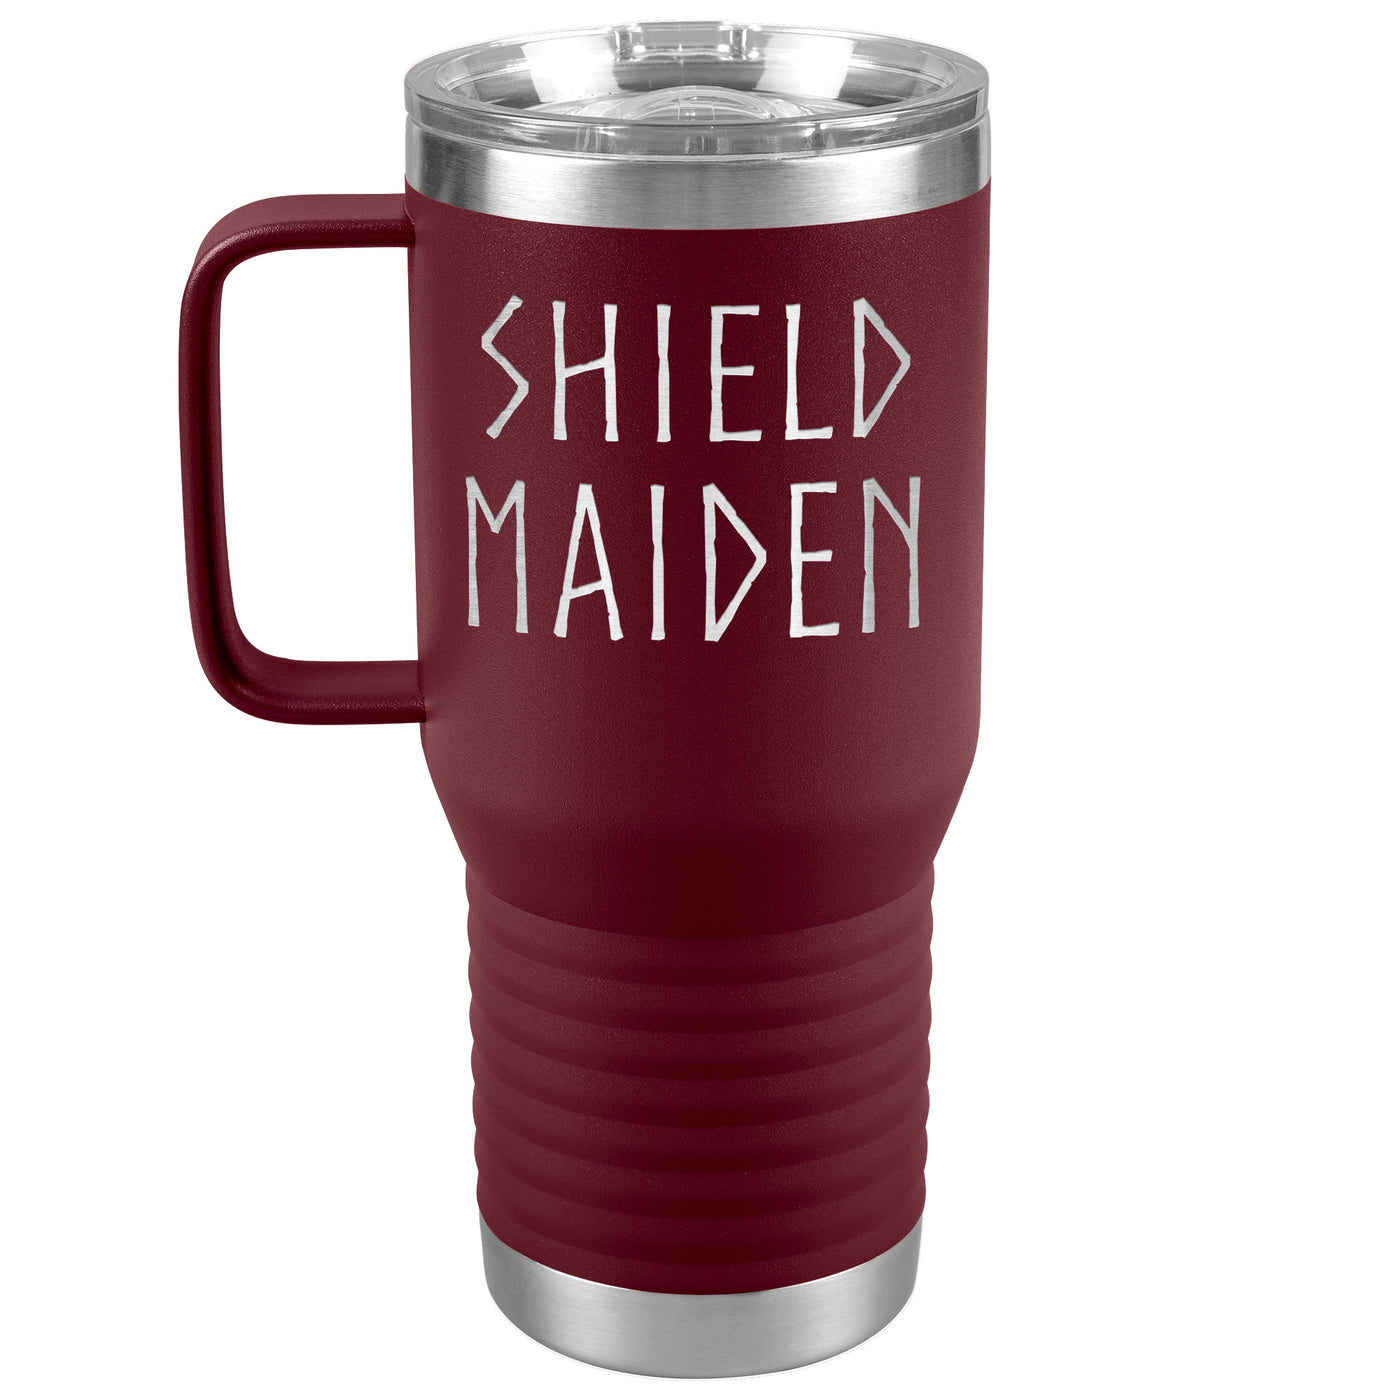 Shield Maiden Insulated To Go Mug